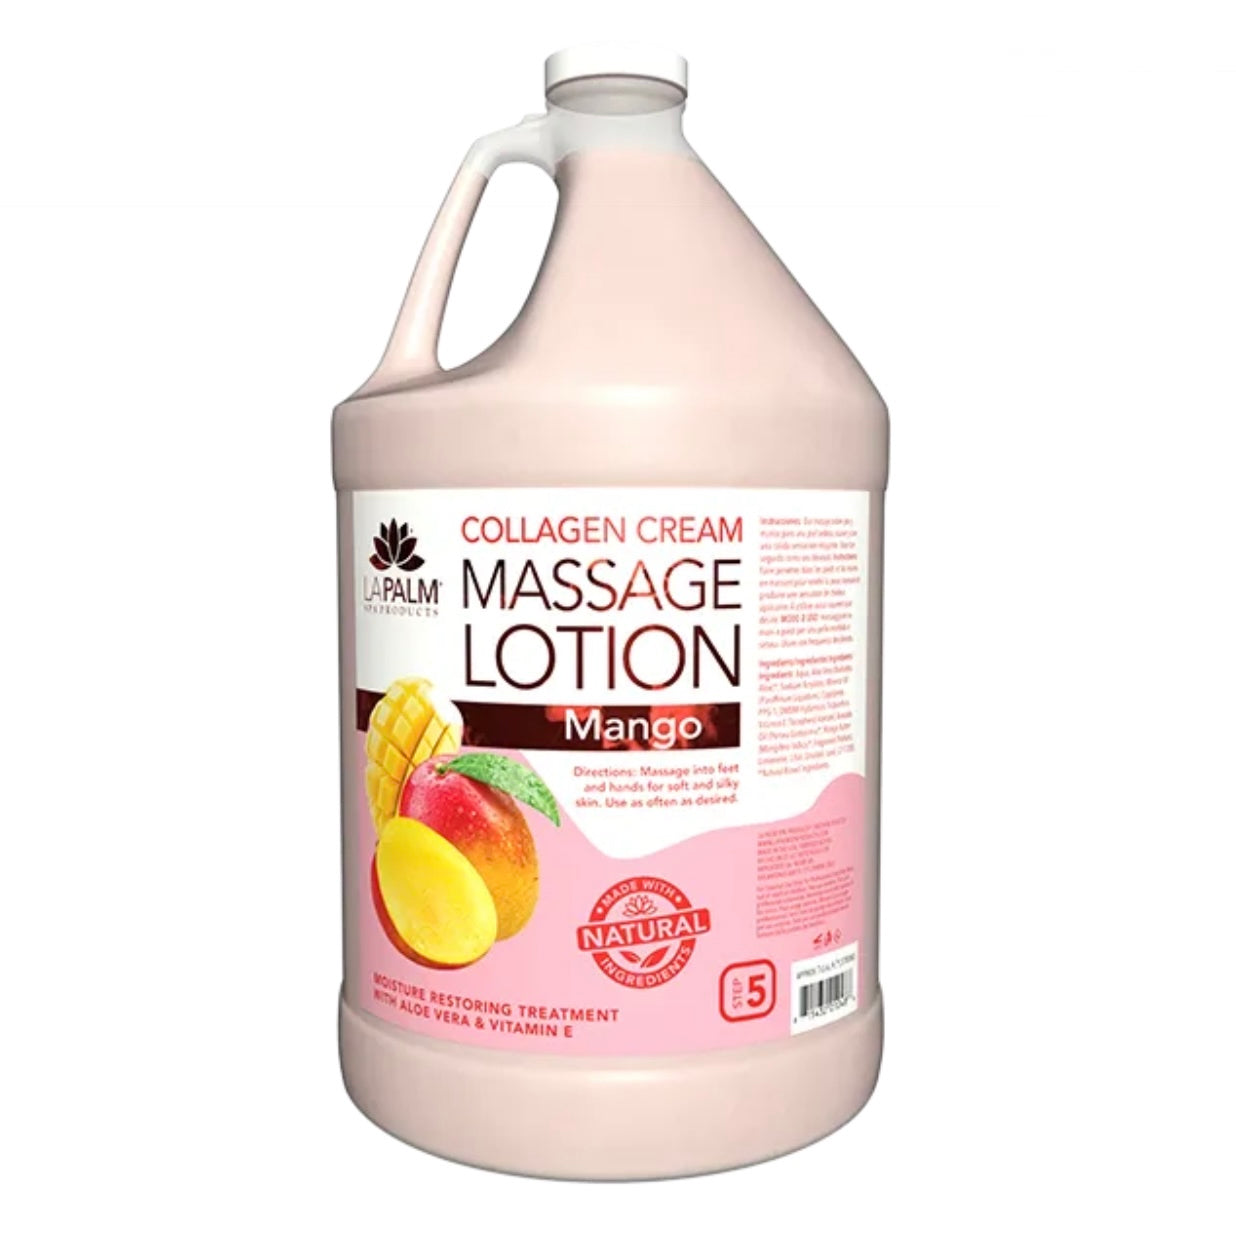 LaPalm Collagen Massage Lotion - Mango (1 Gallon)